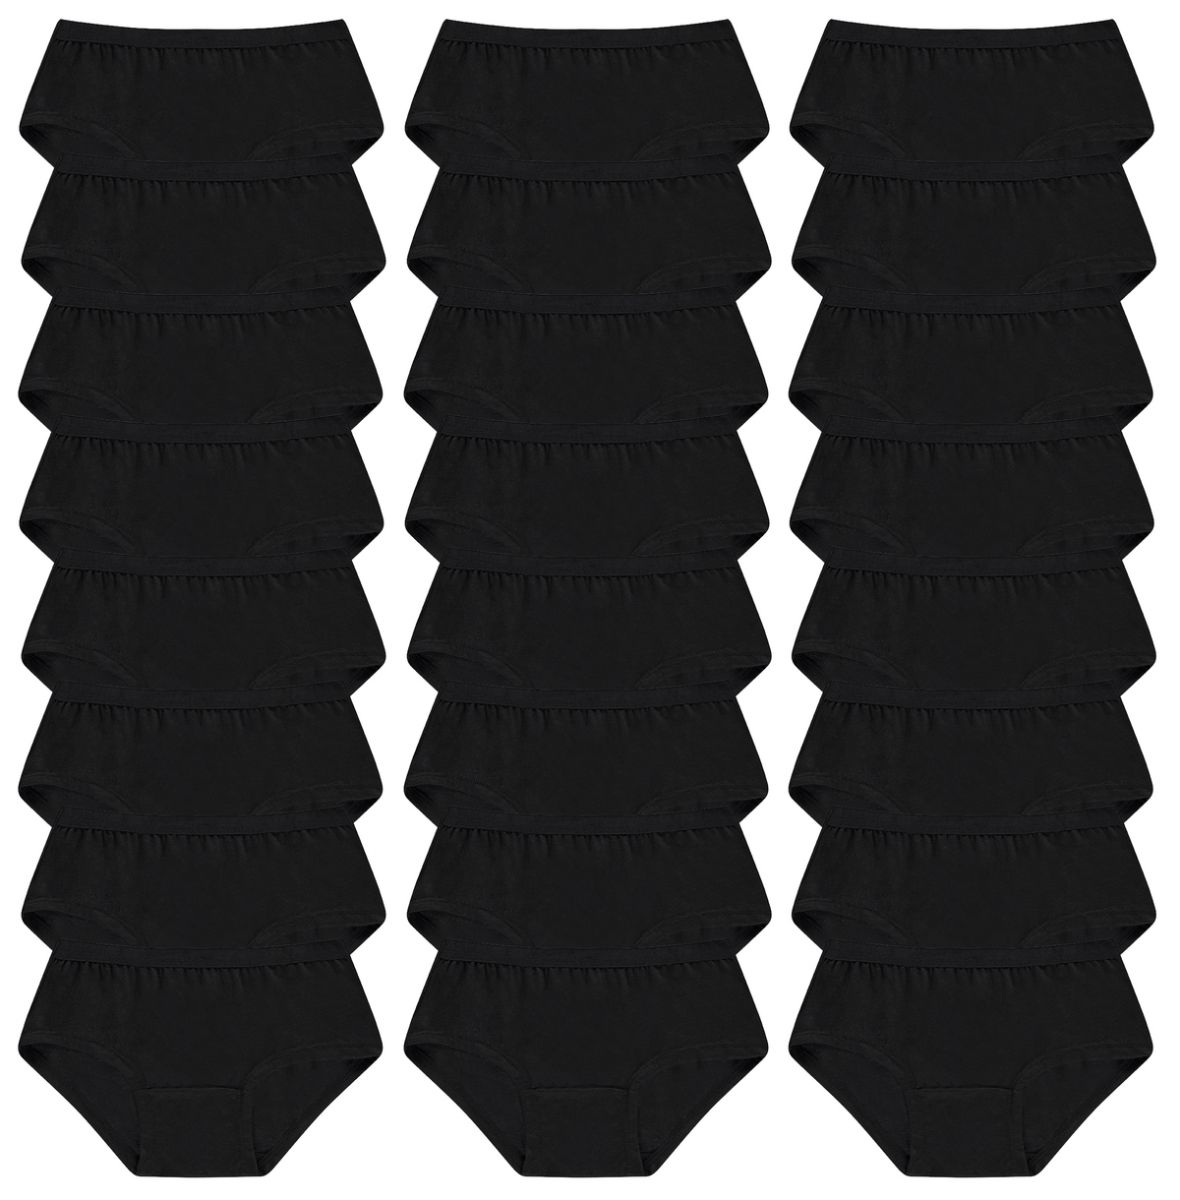 Yacht & Smith 9 Pack of Womens Cotton Underwear Black Panty Briefs in Bulk,  95% Cotton Soft, 9 Colors (BLACK, Medium)